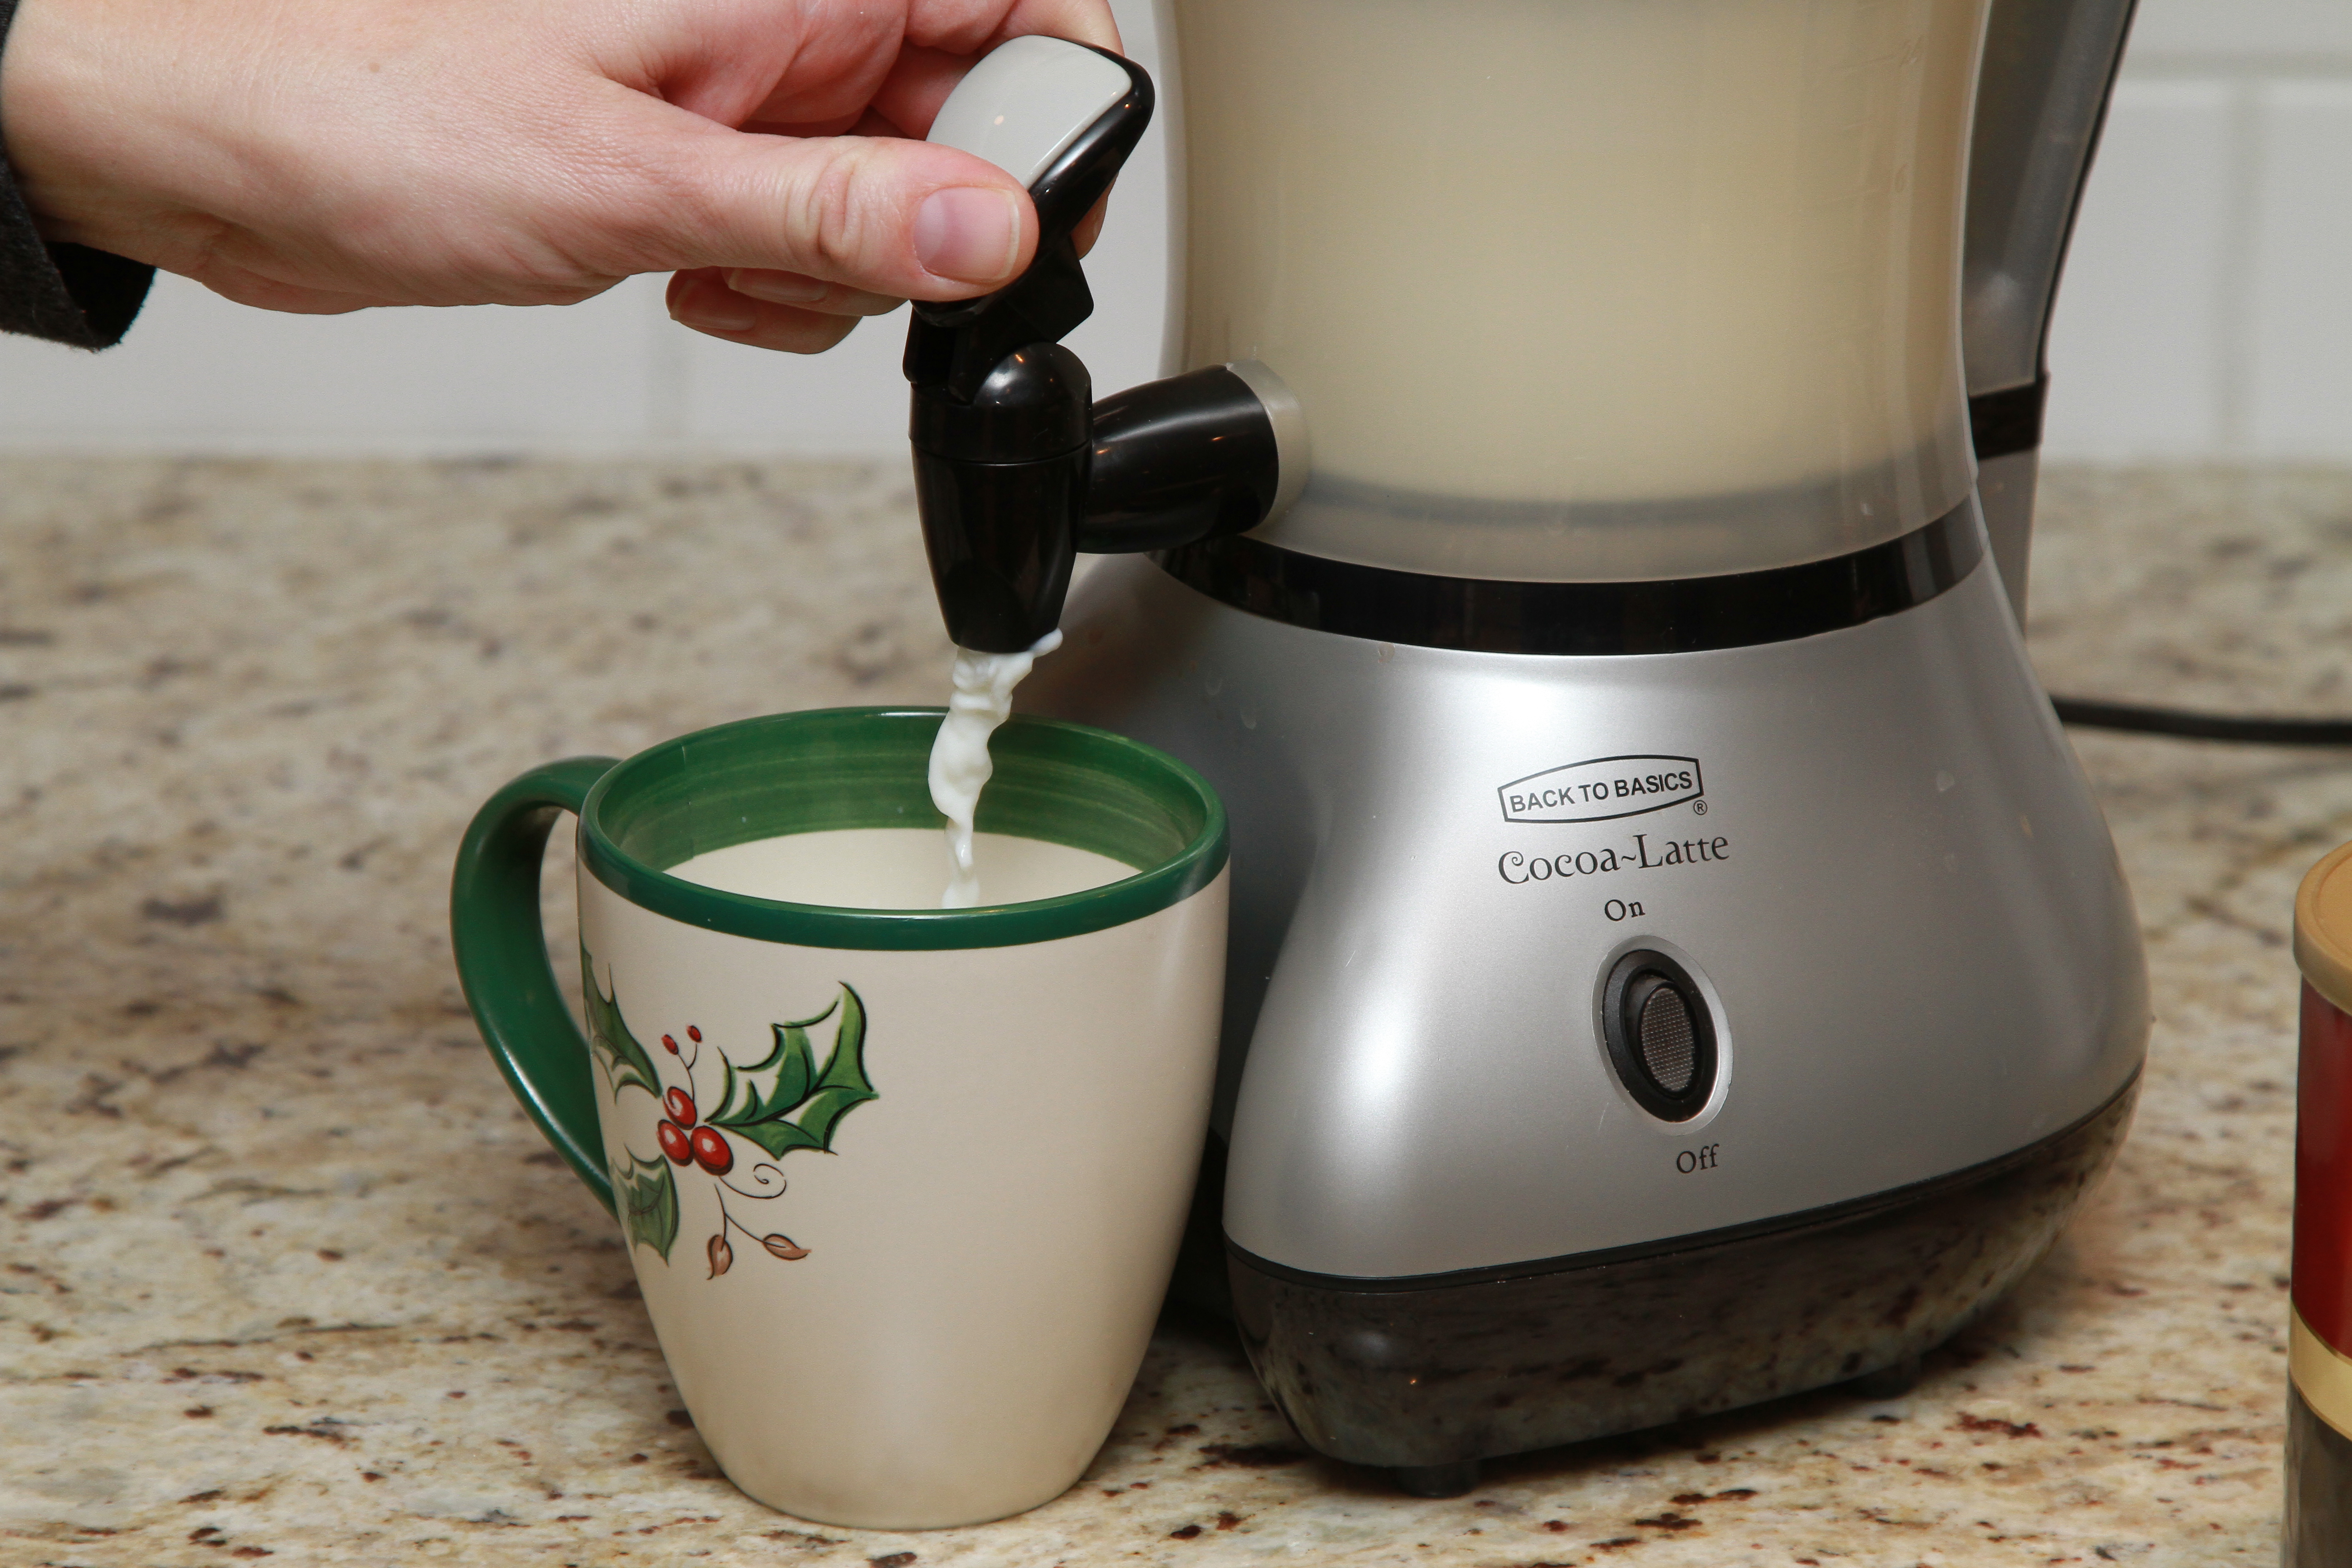 Back to Basics Cocoa-Latte hot drink maker